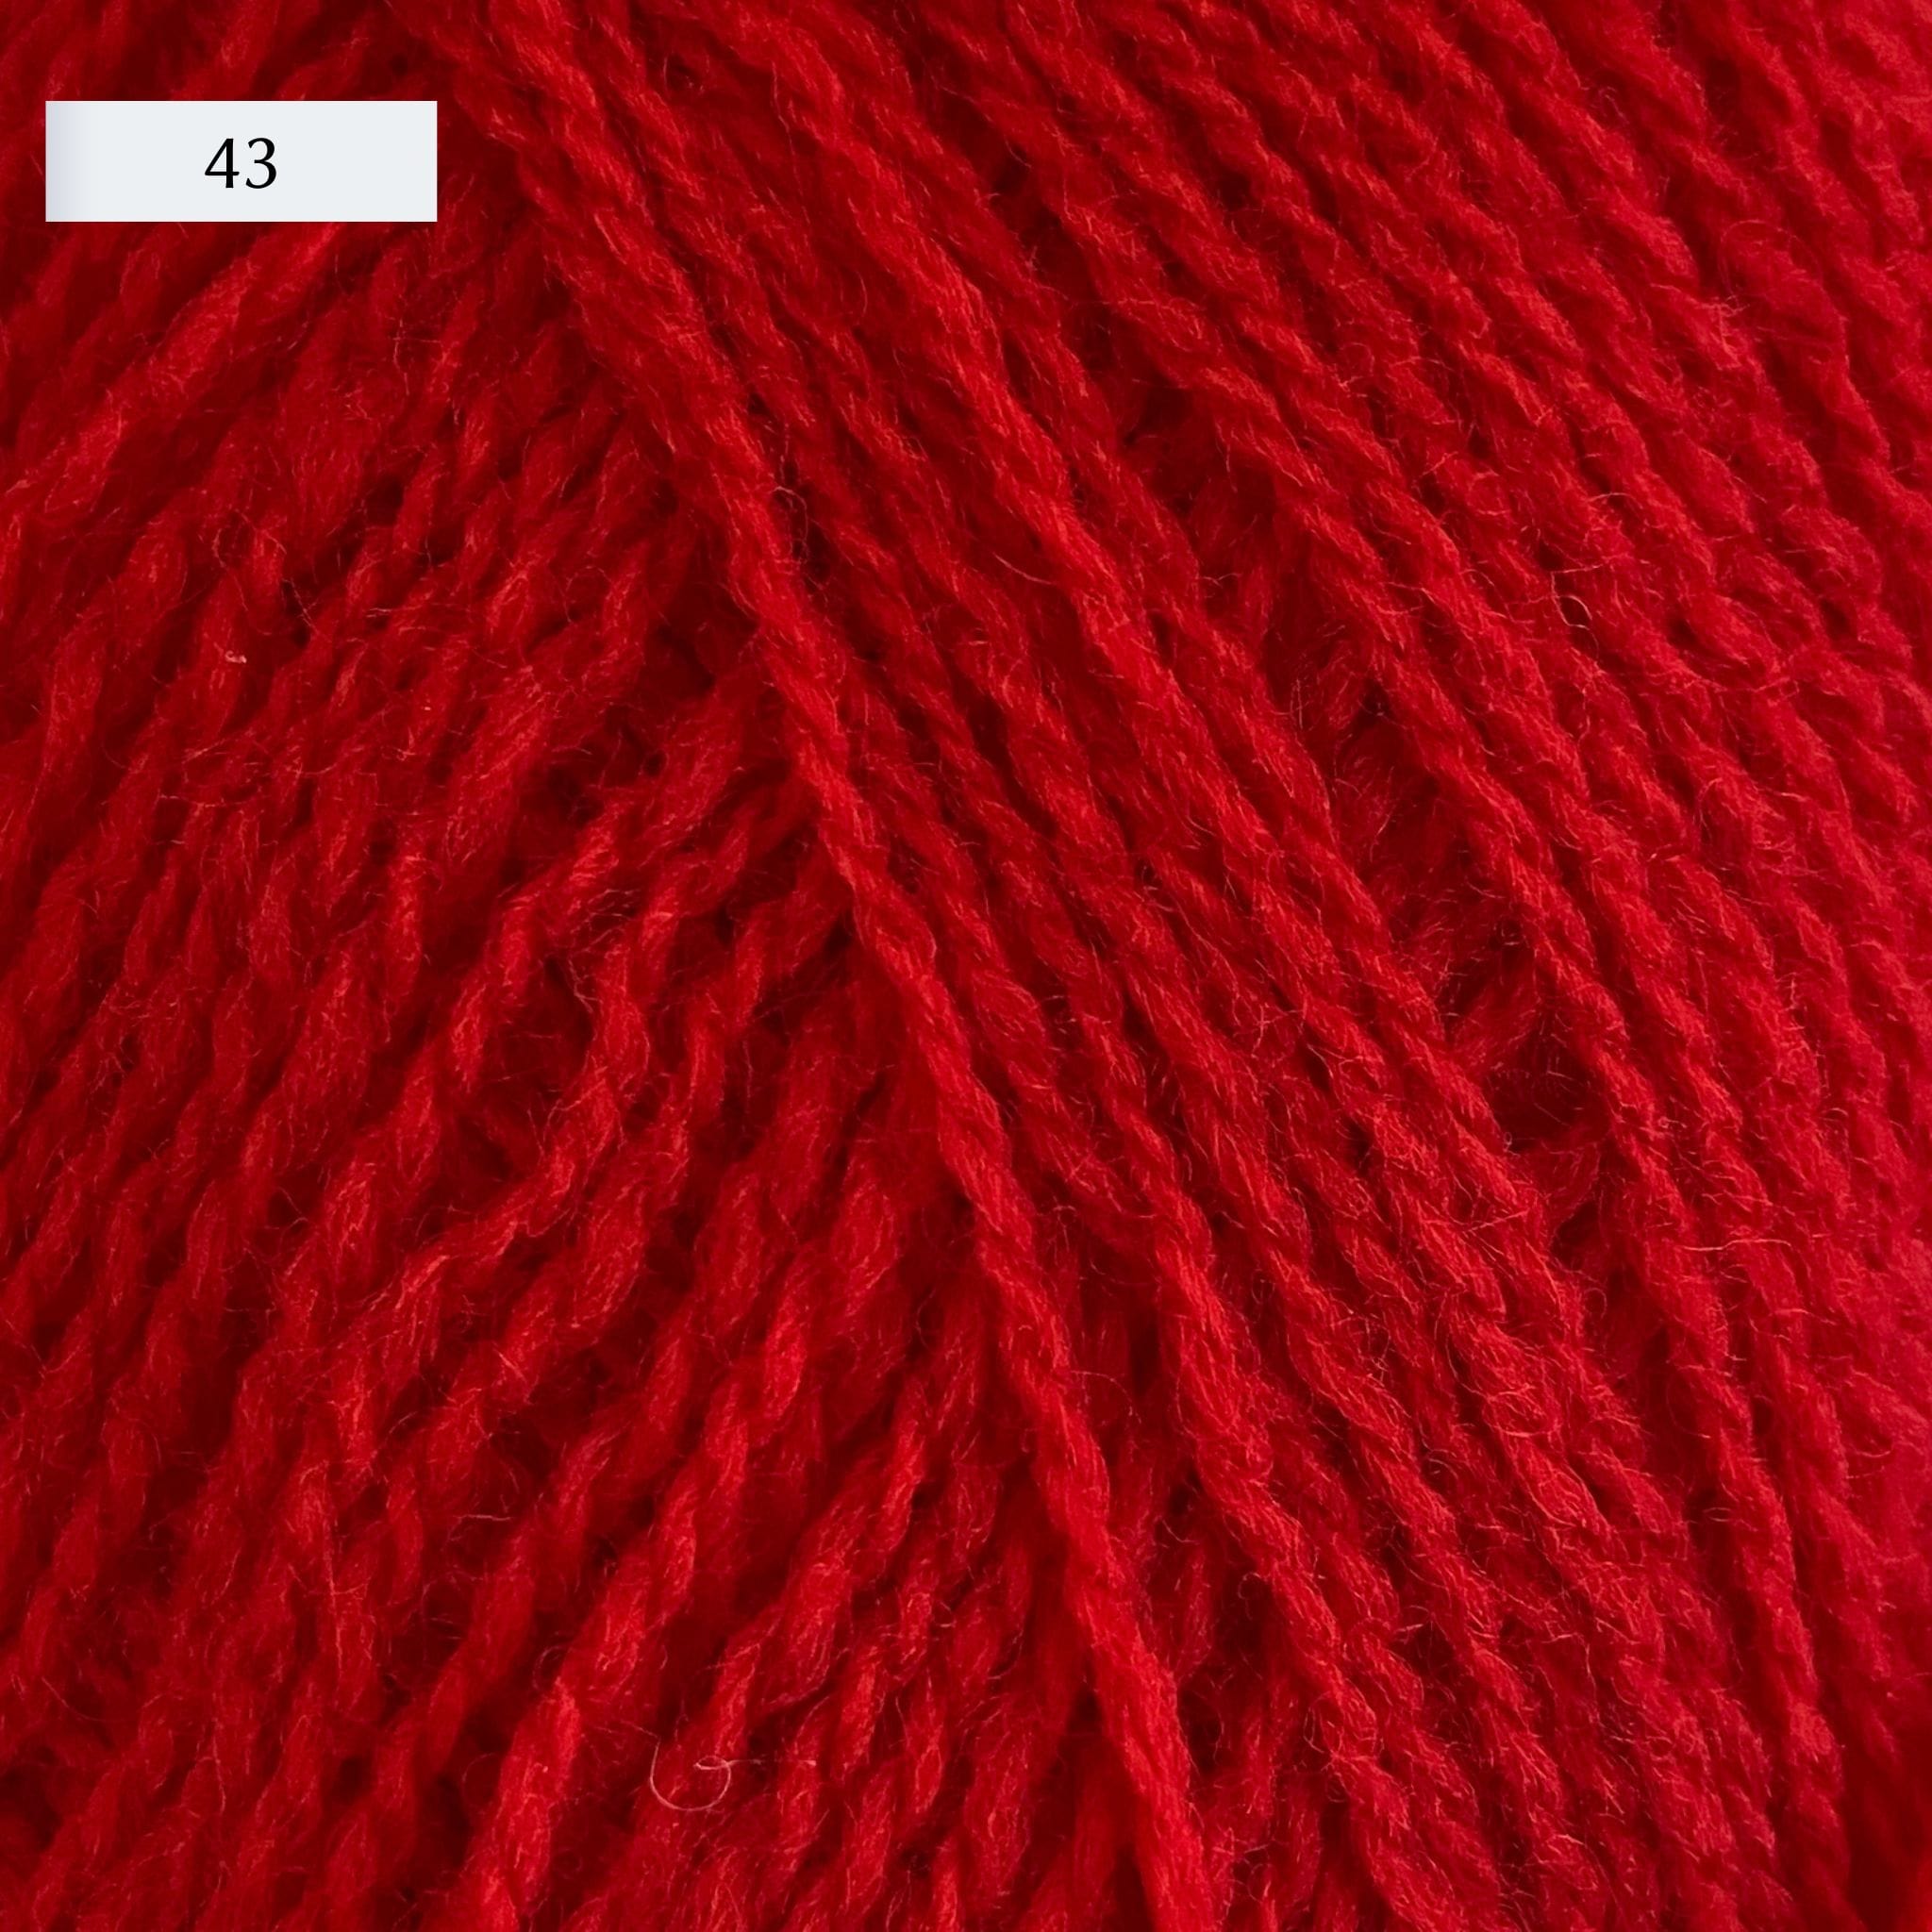 Rauma Lamullgarn, a fingering weight yarn, in color 43, a bright Christmas red